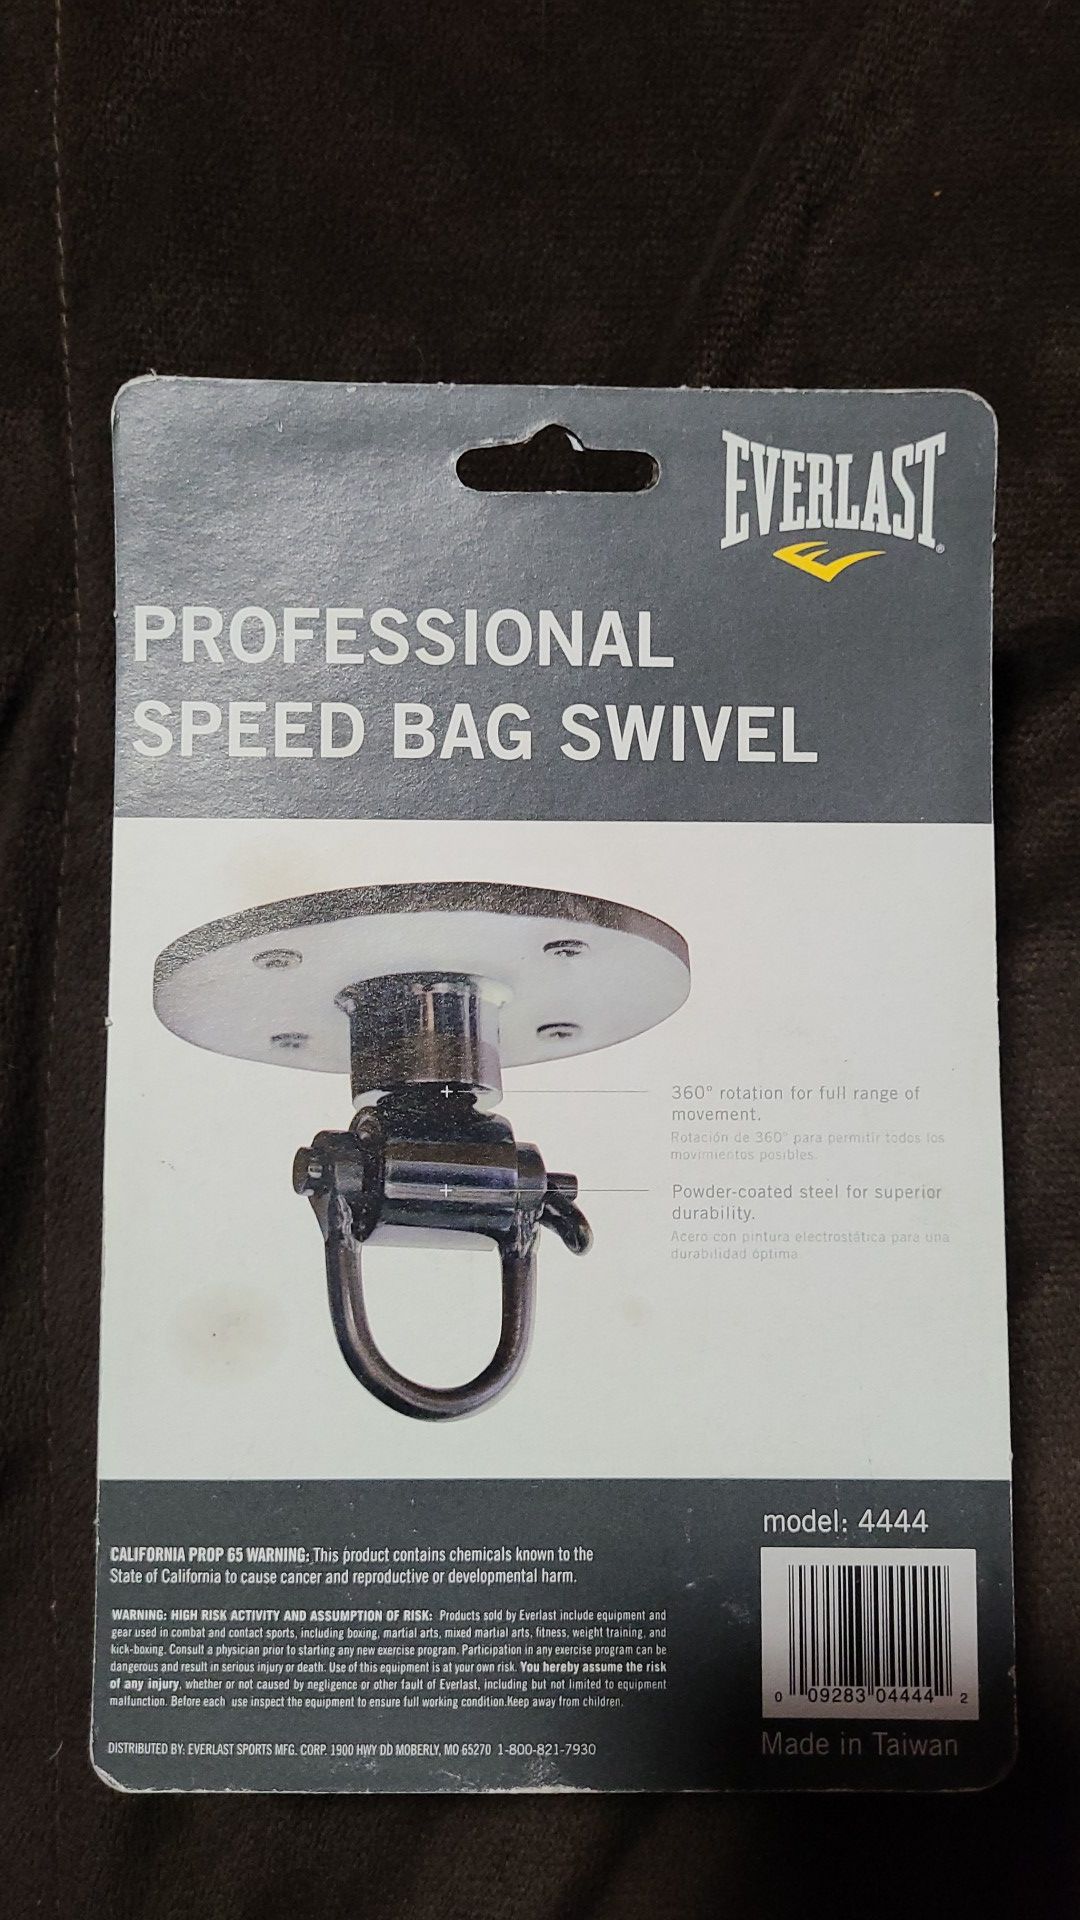 Brand new Professional speed bag swivel